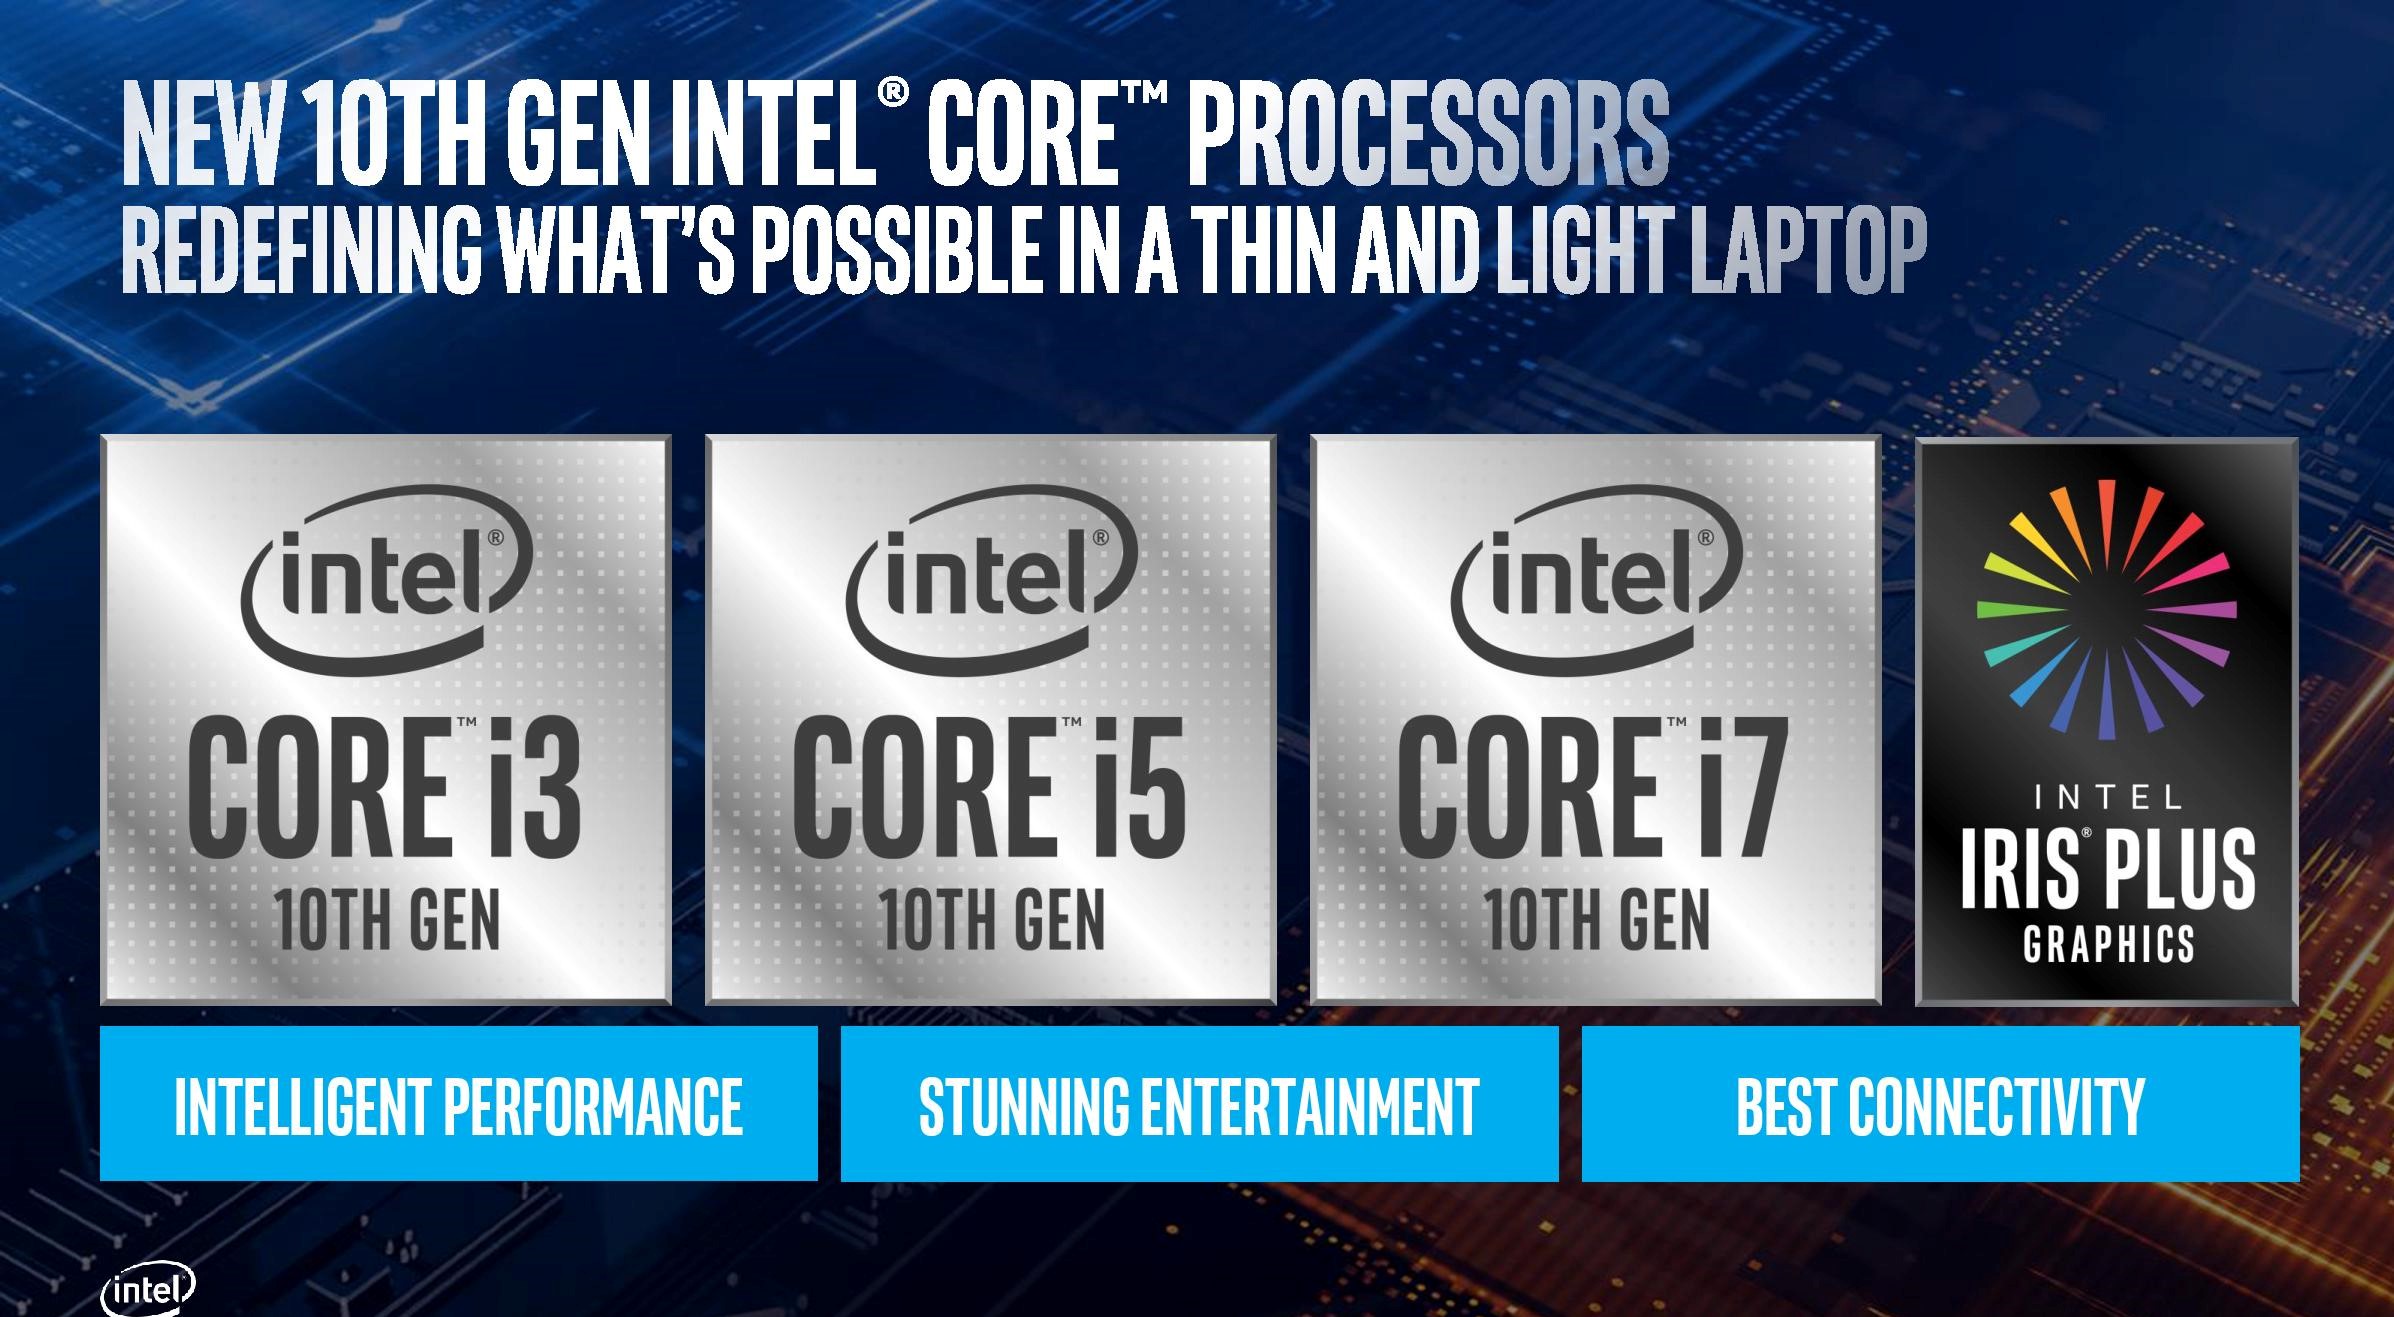 Анонсирован процессор Intel 10th Gen 10nm «Ice Lake» для ноутбуков и 2-в-1